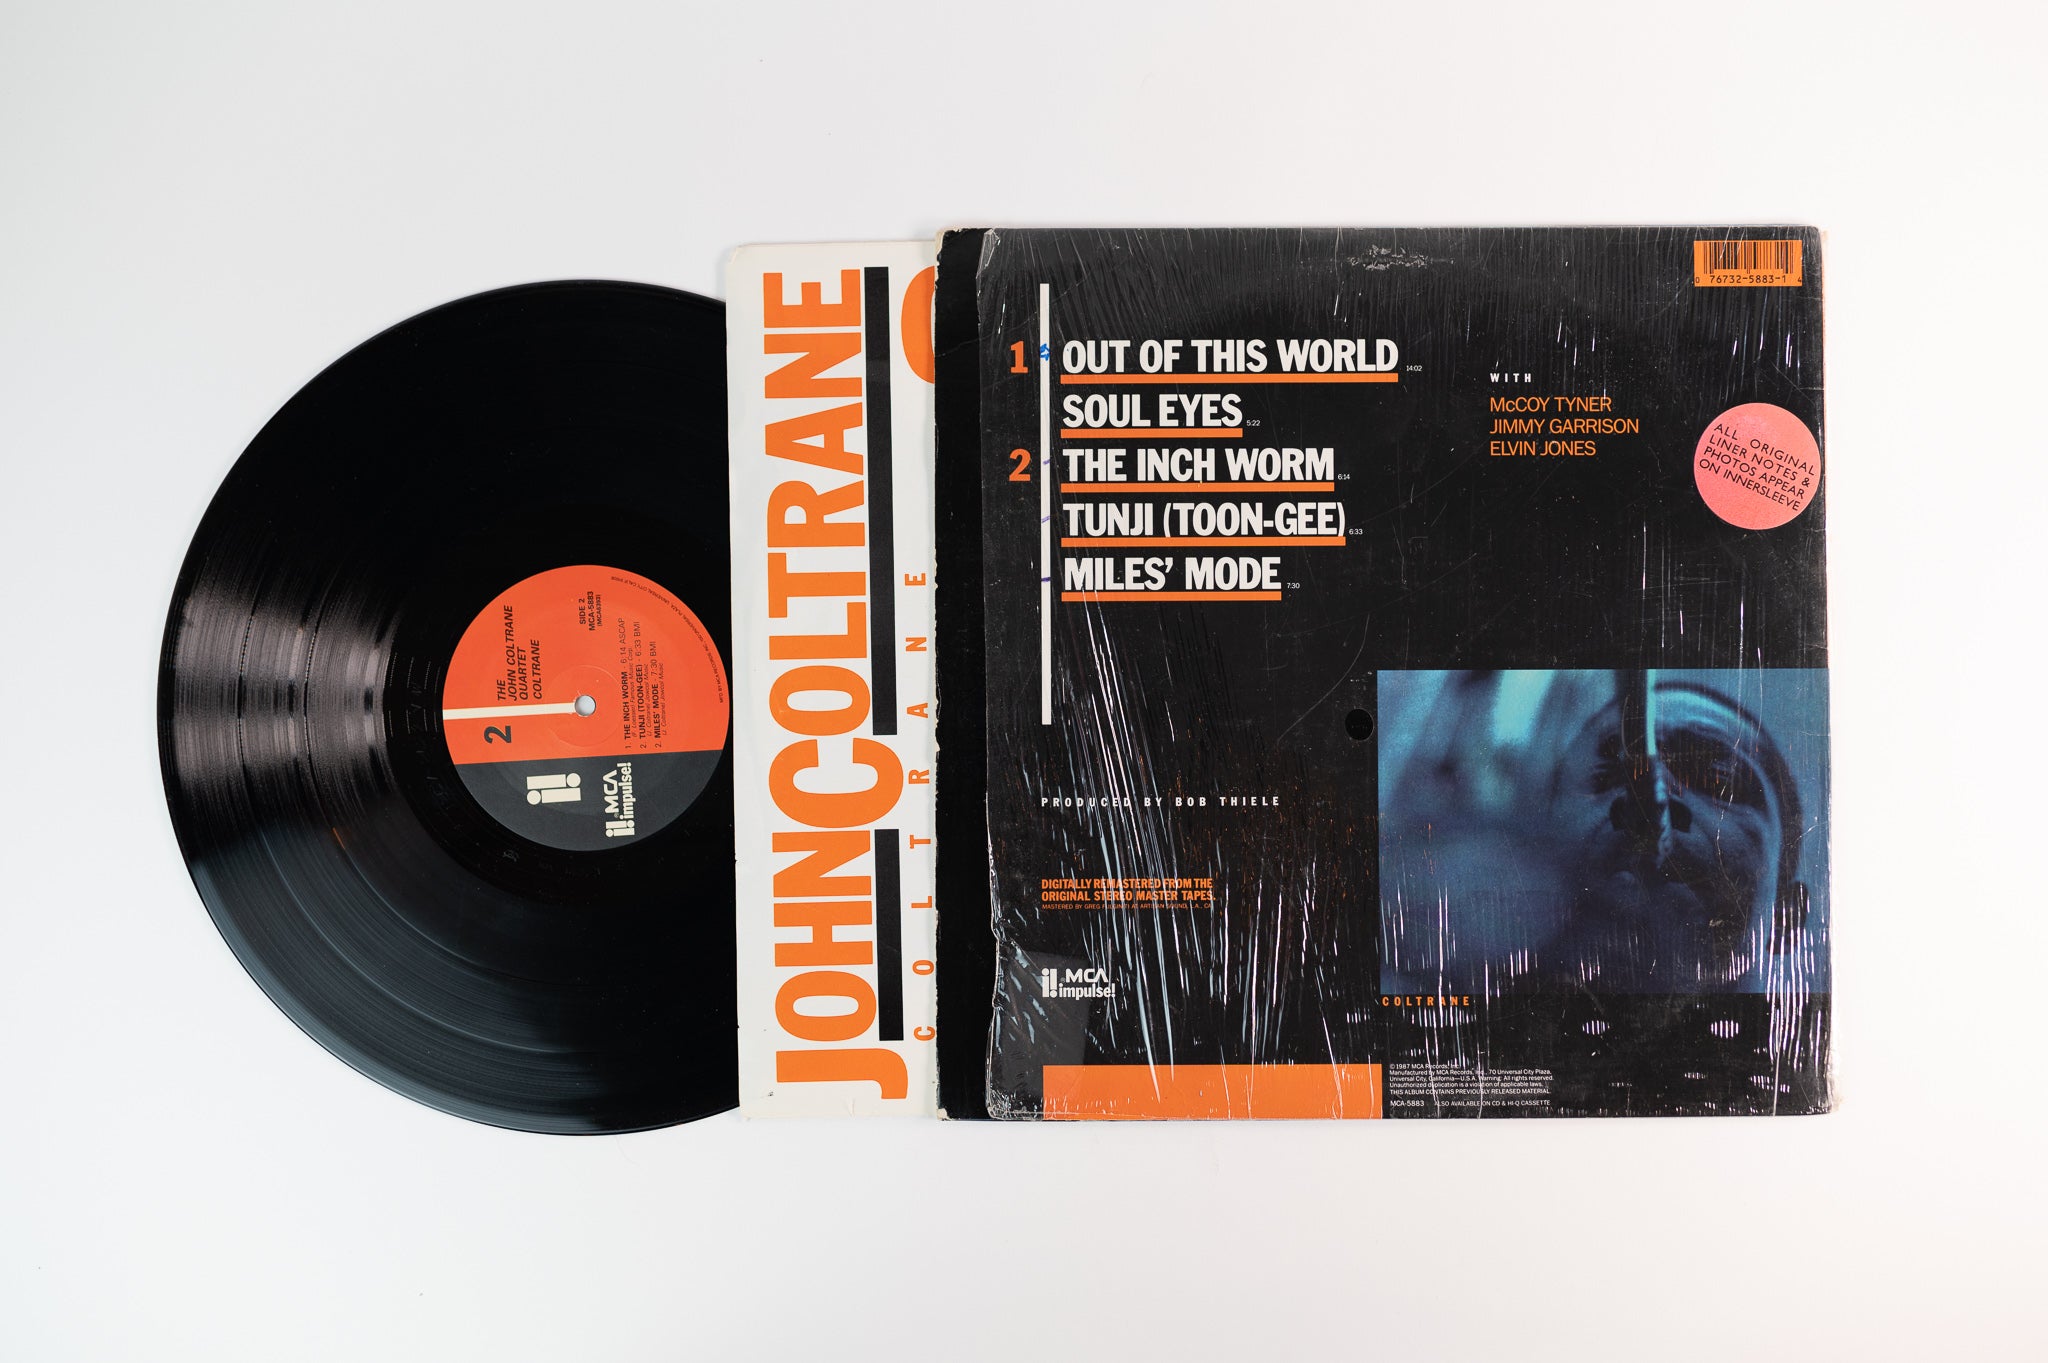 The John Coltrane Quartet - Coltrane on MCA Impulse Reissue